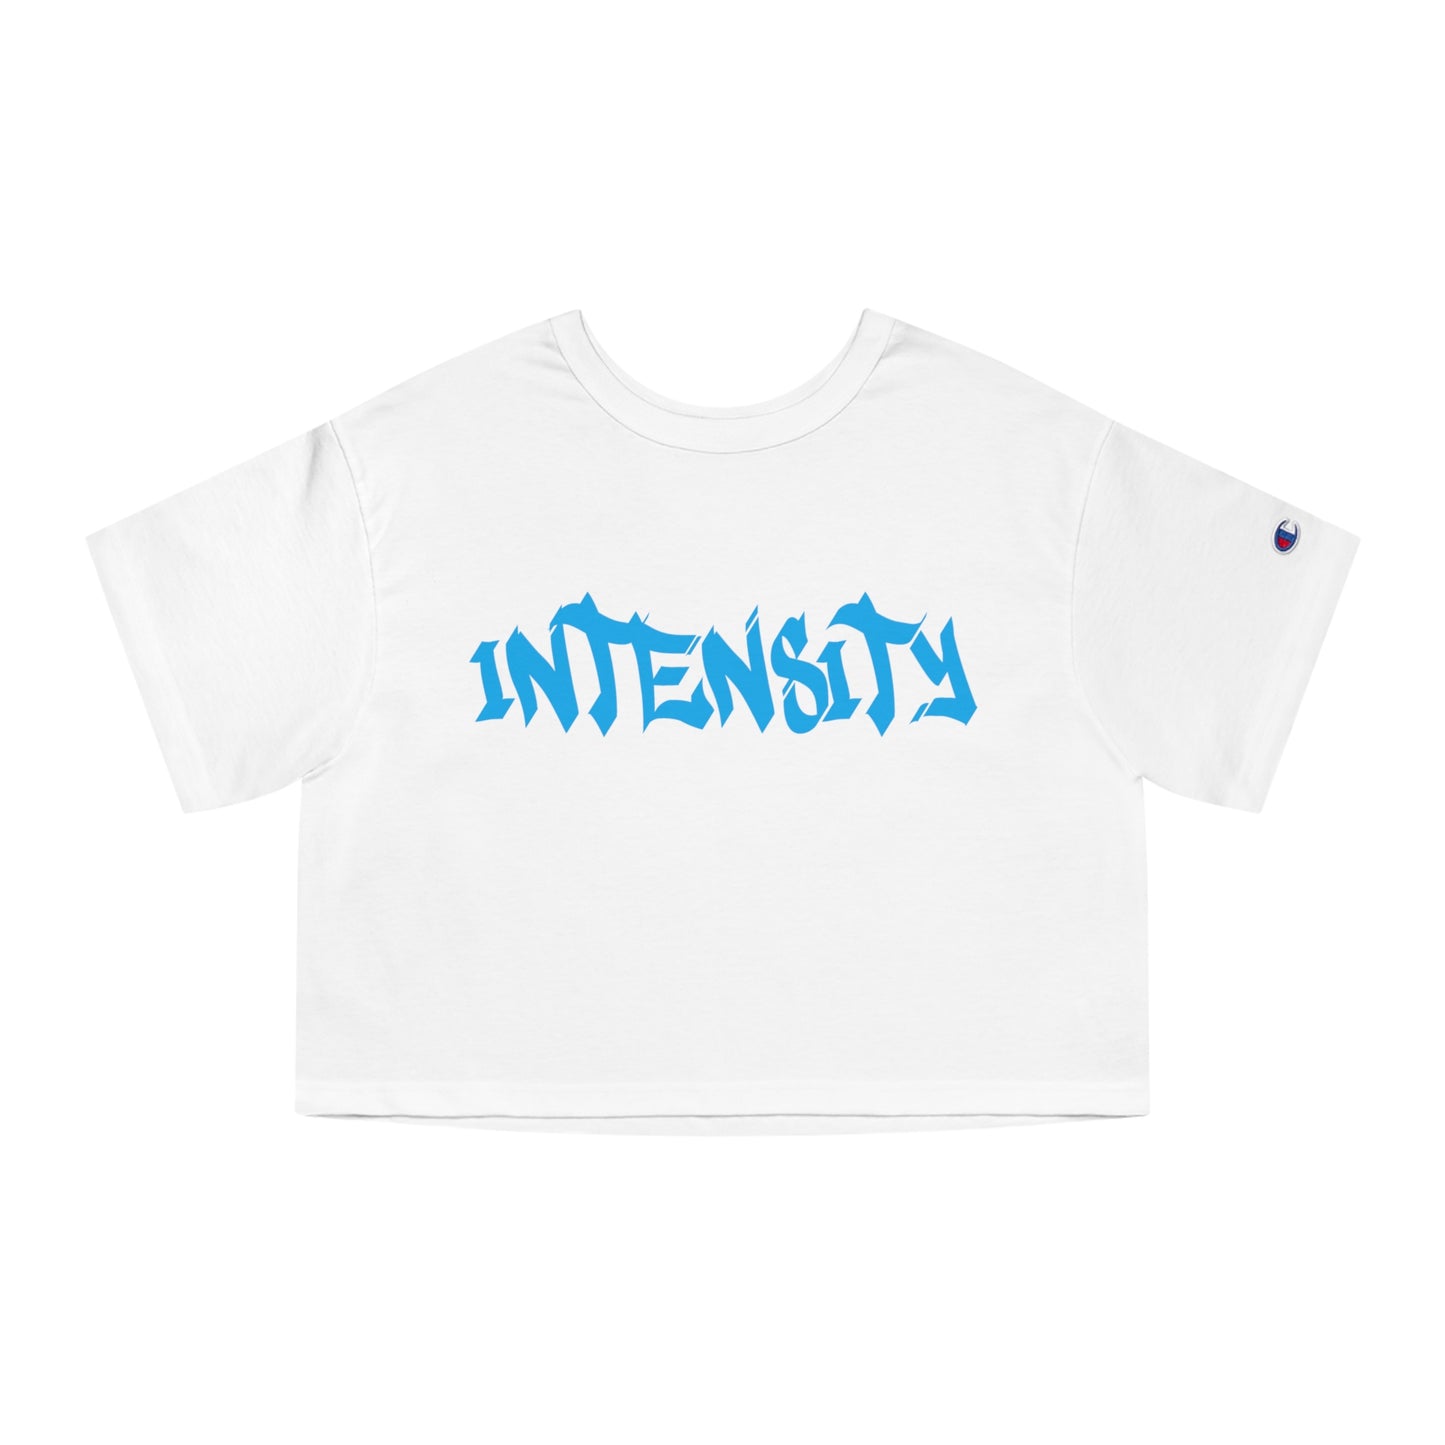 Women's "INTENSITY" Crop Top T-Shirt Baby Blue